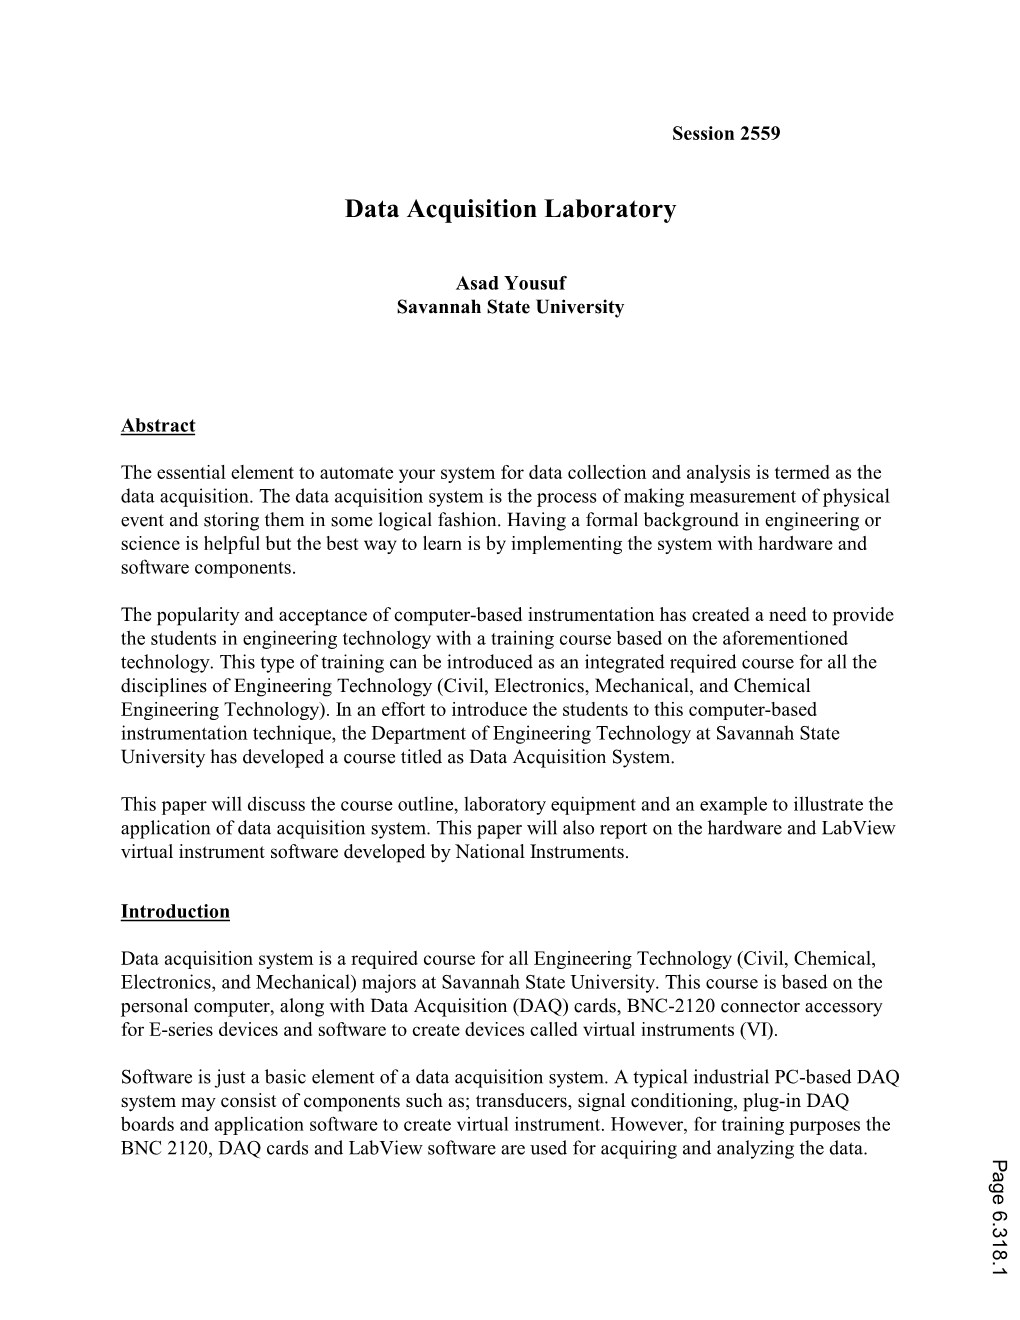 Data Acquisition Laboratory